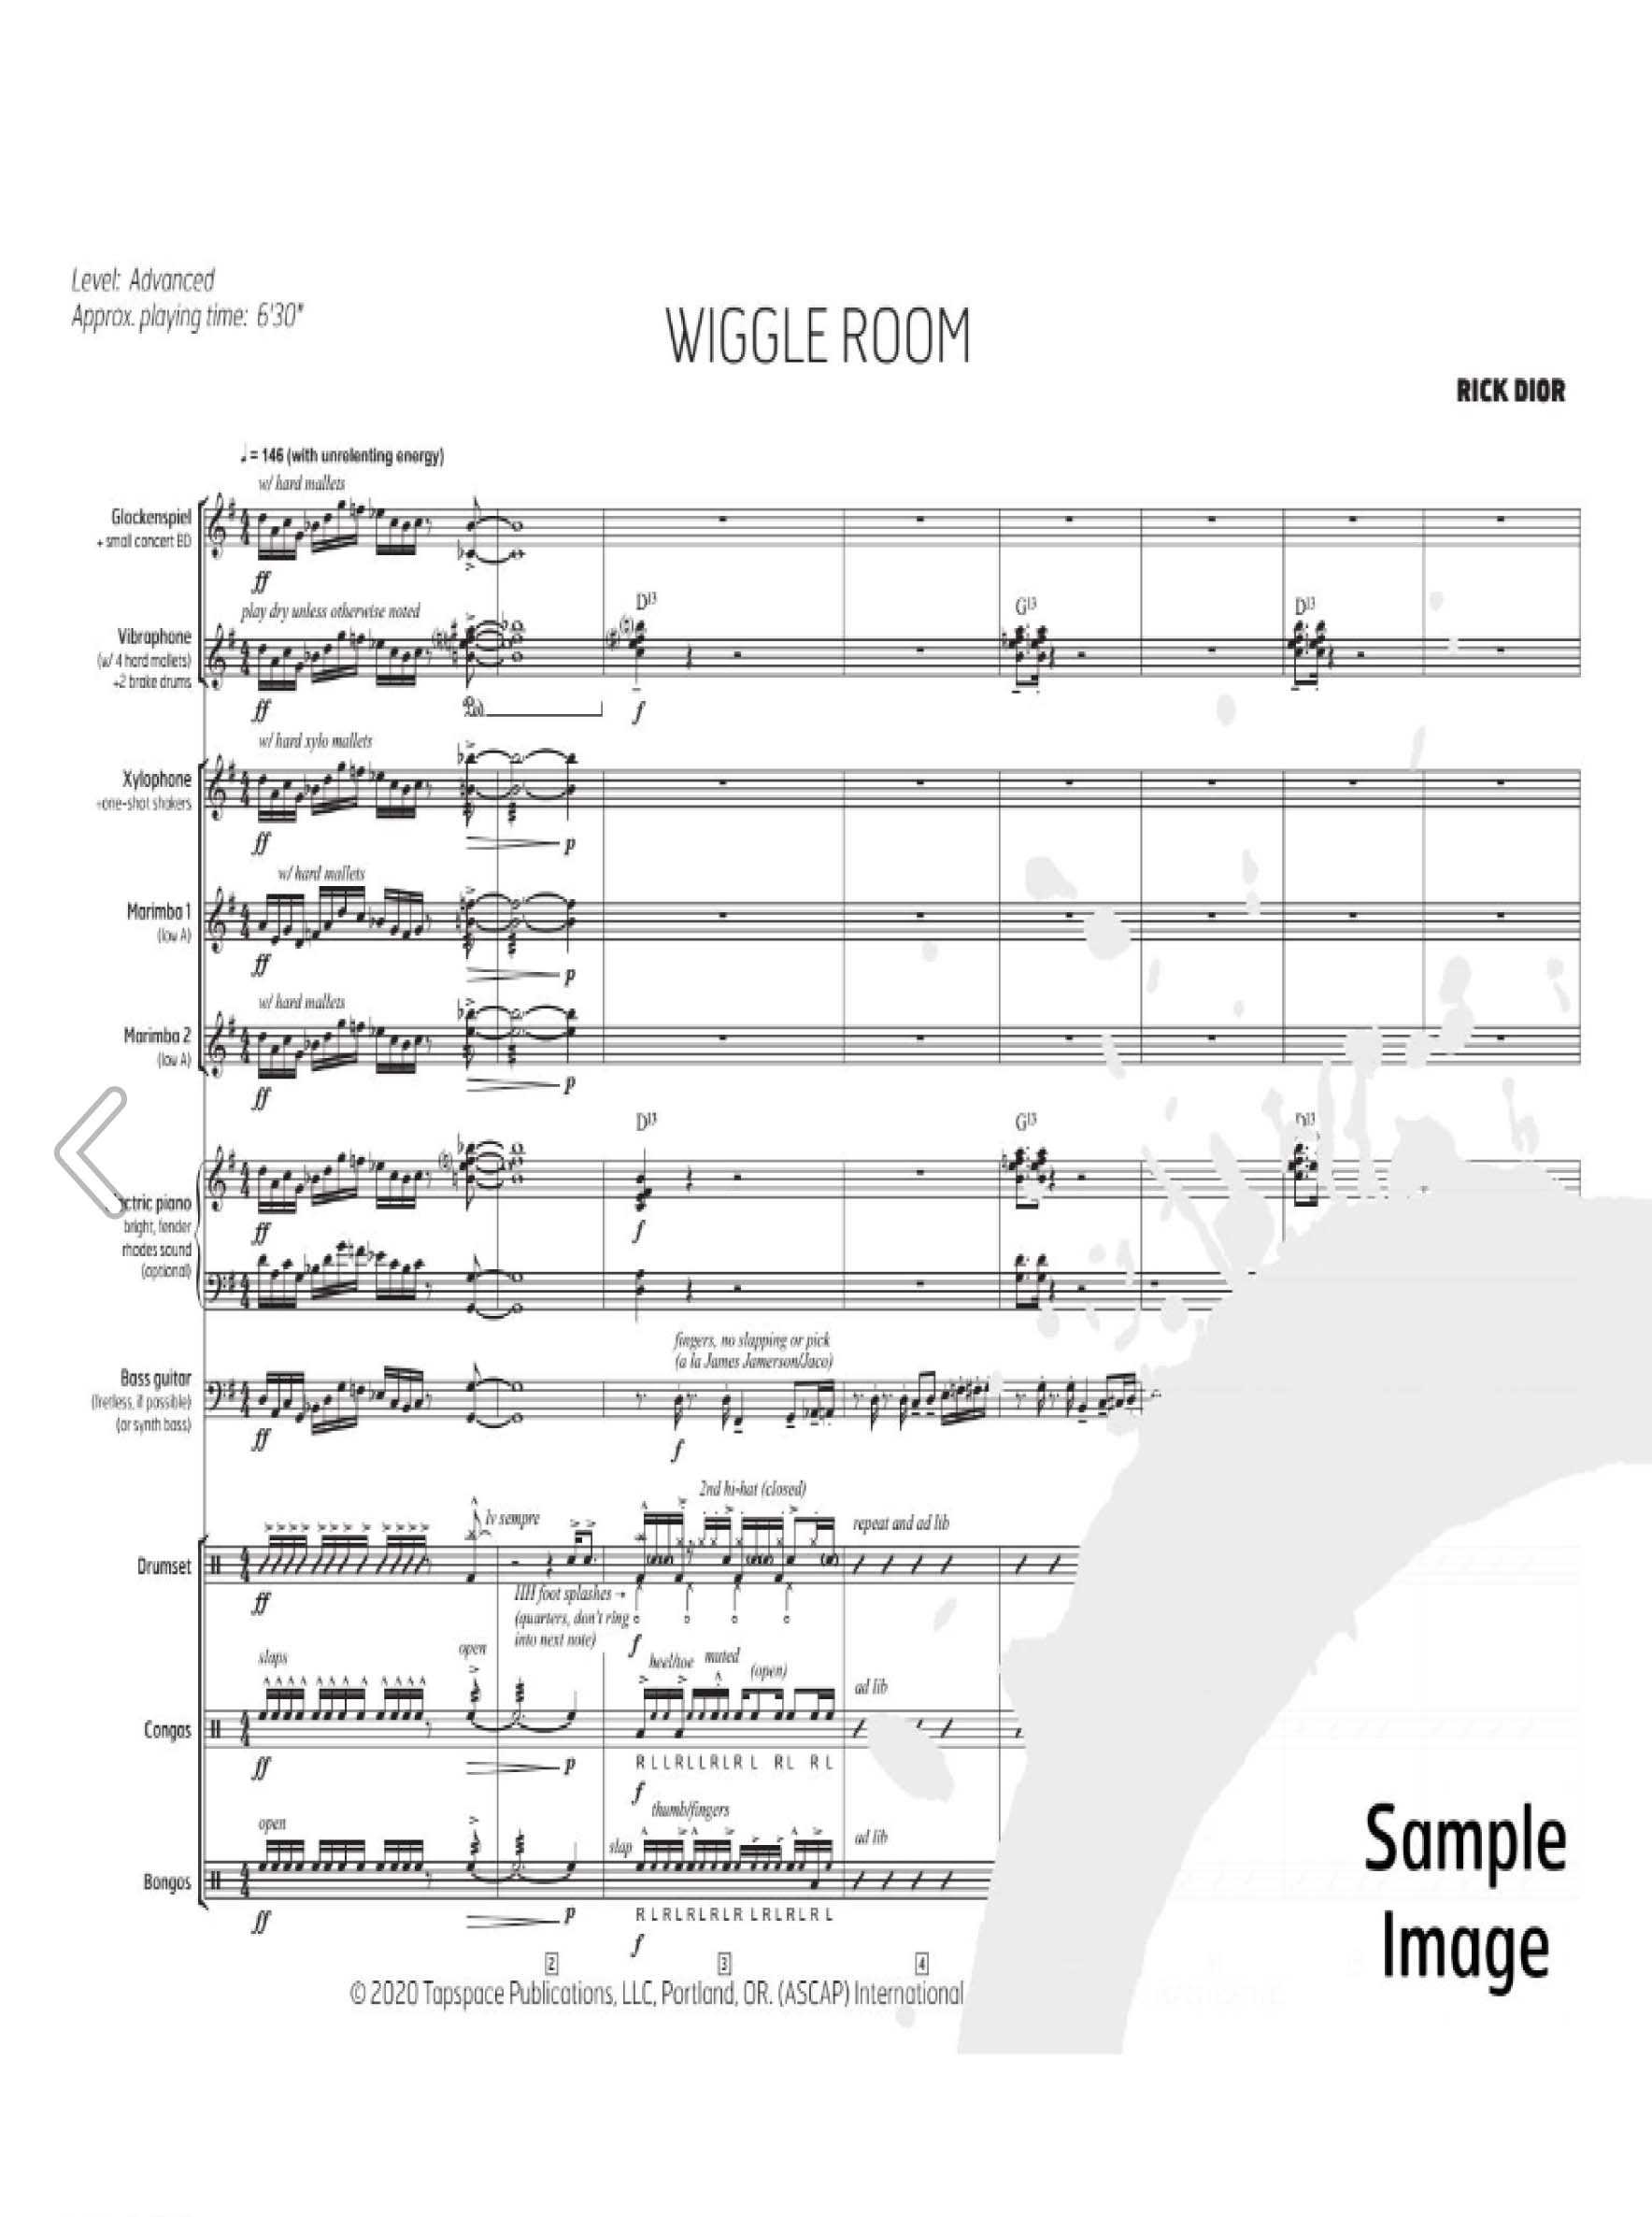 Wiggle Room by Rick Dior